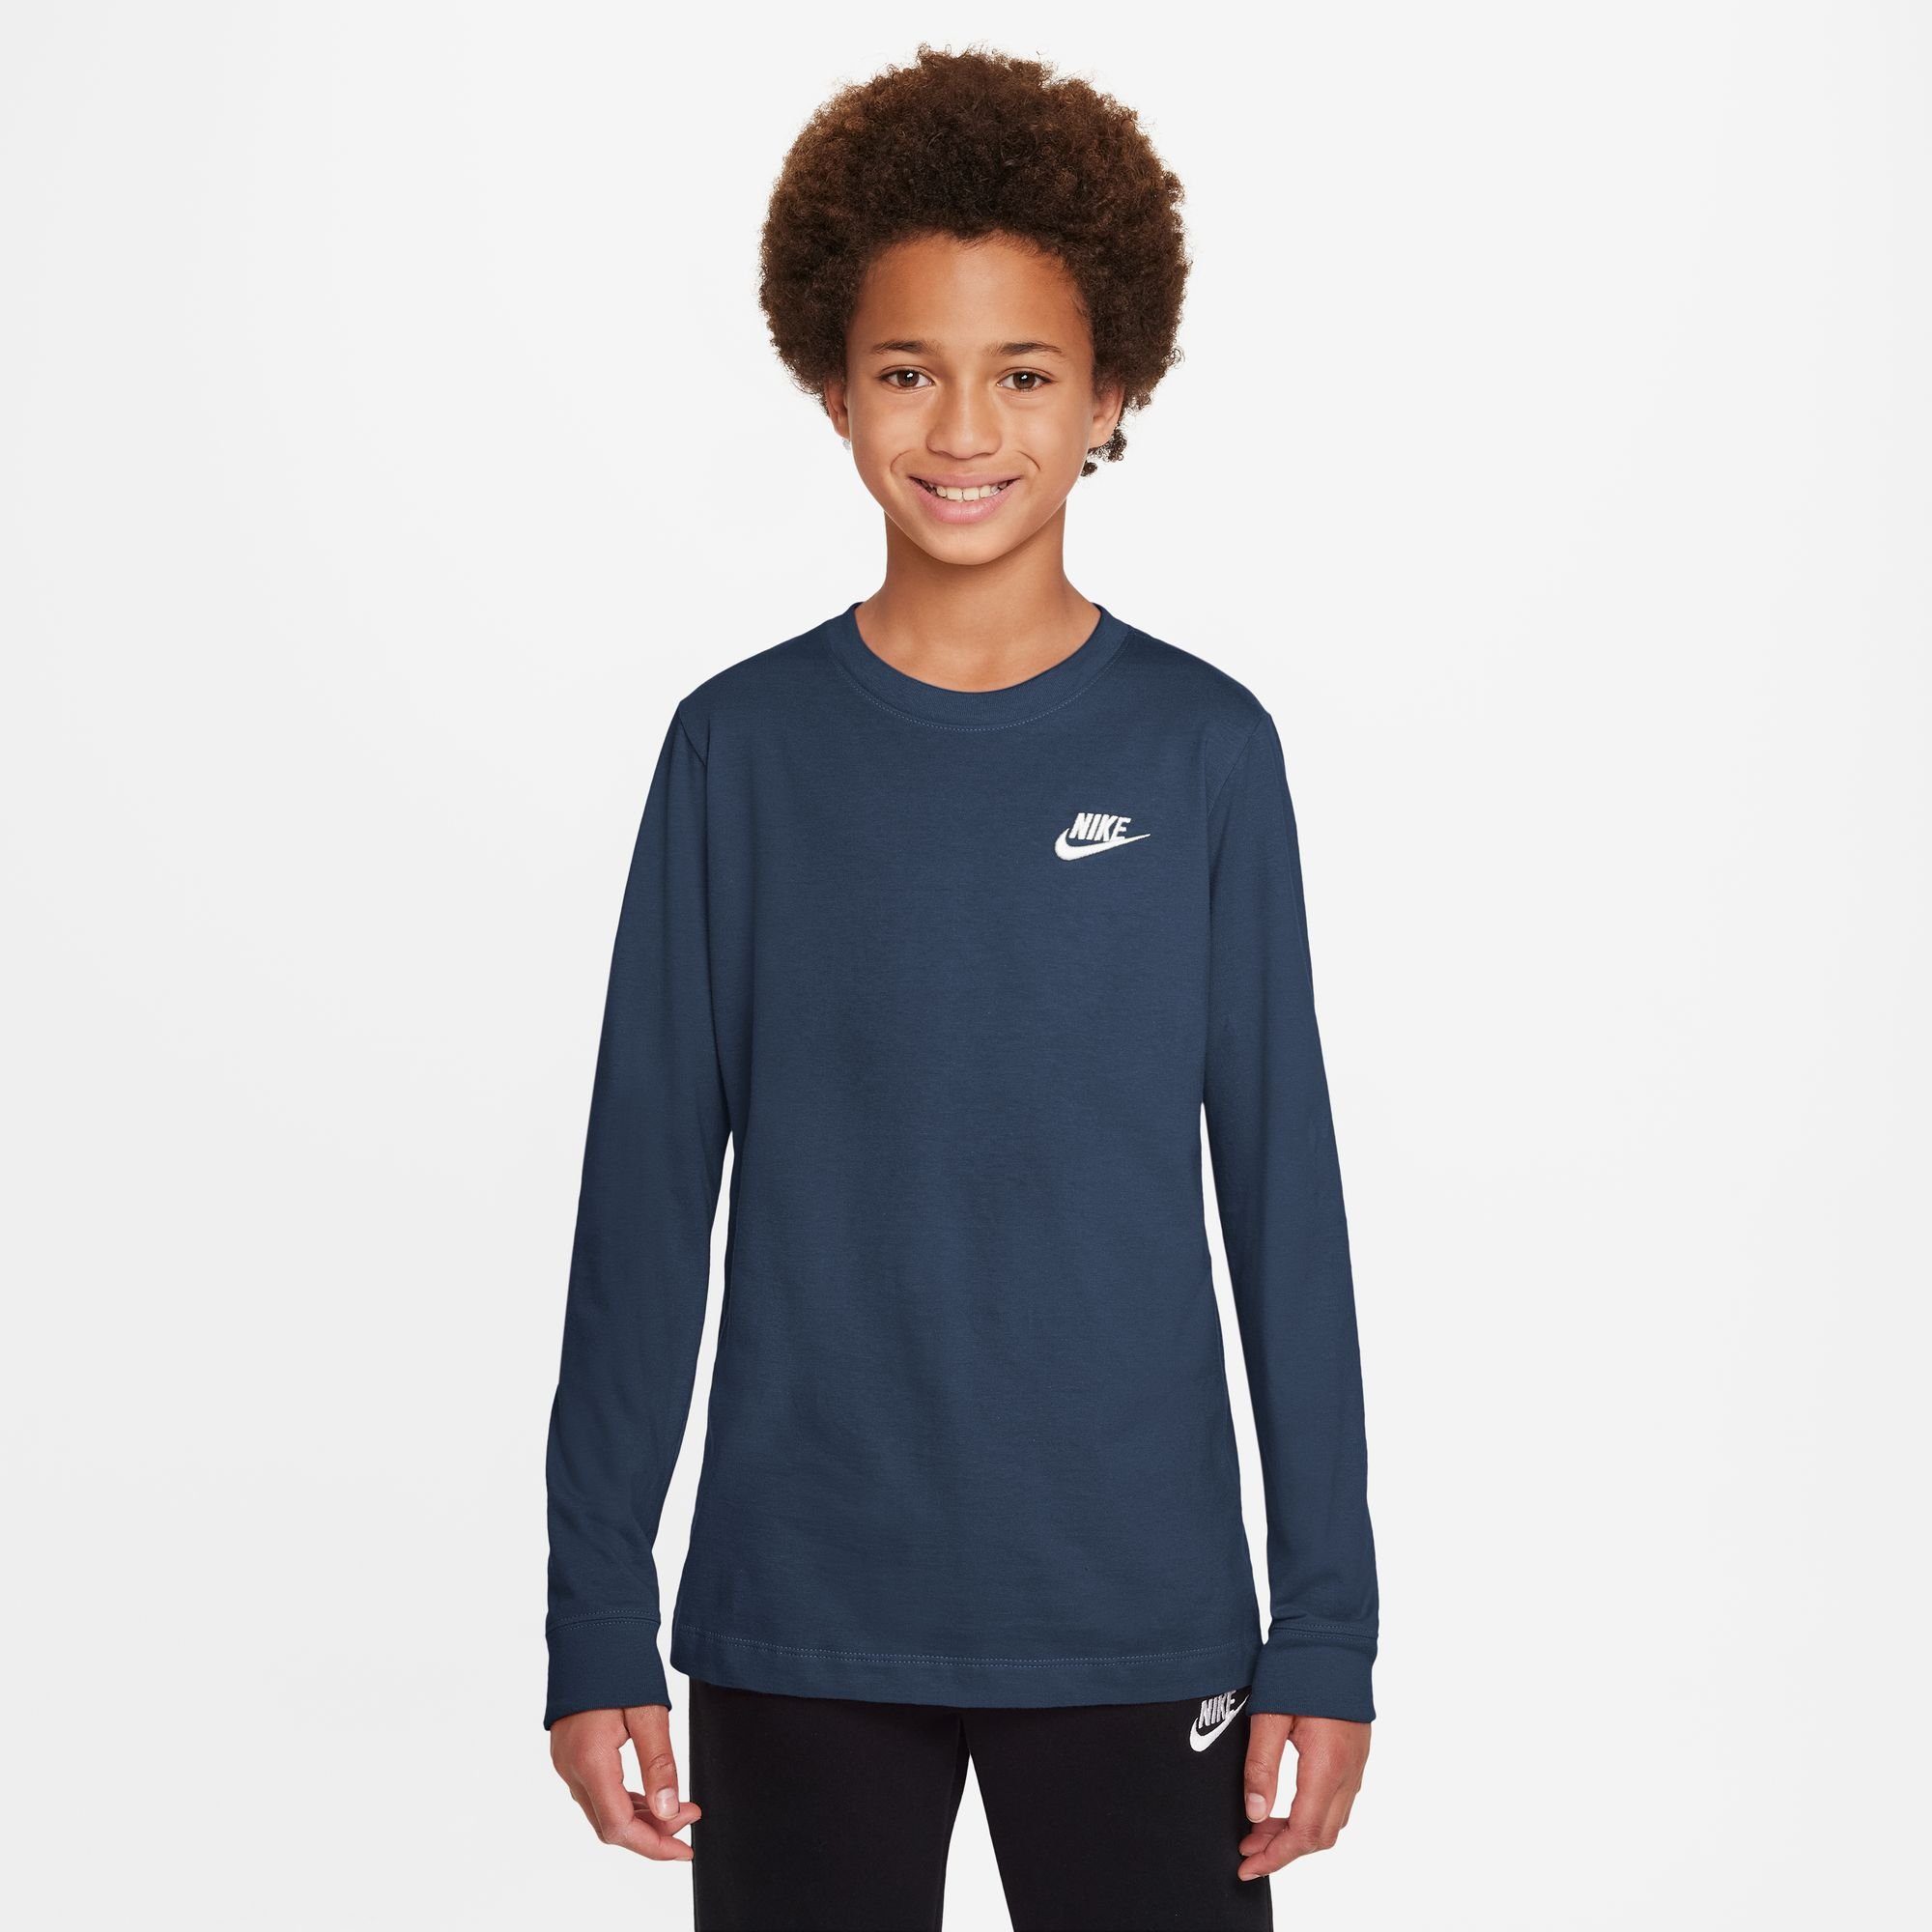 BIG T-SHIRT Langarmshirt LONG-SLEEVE KIDS' Sportswear NAVY/WHITE MIDNIGHT (BOYS) Nike